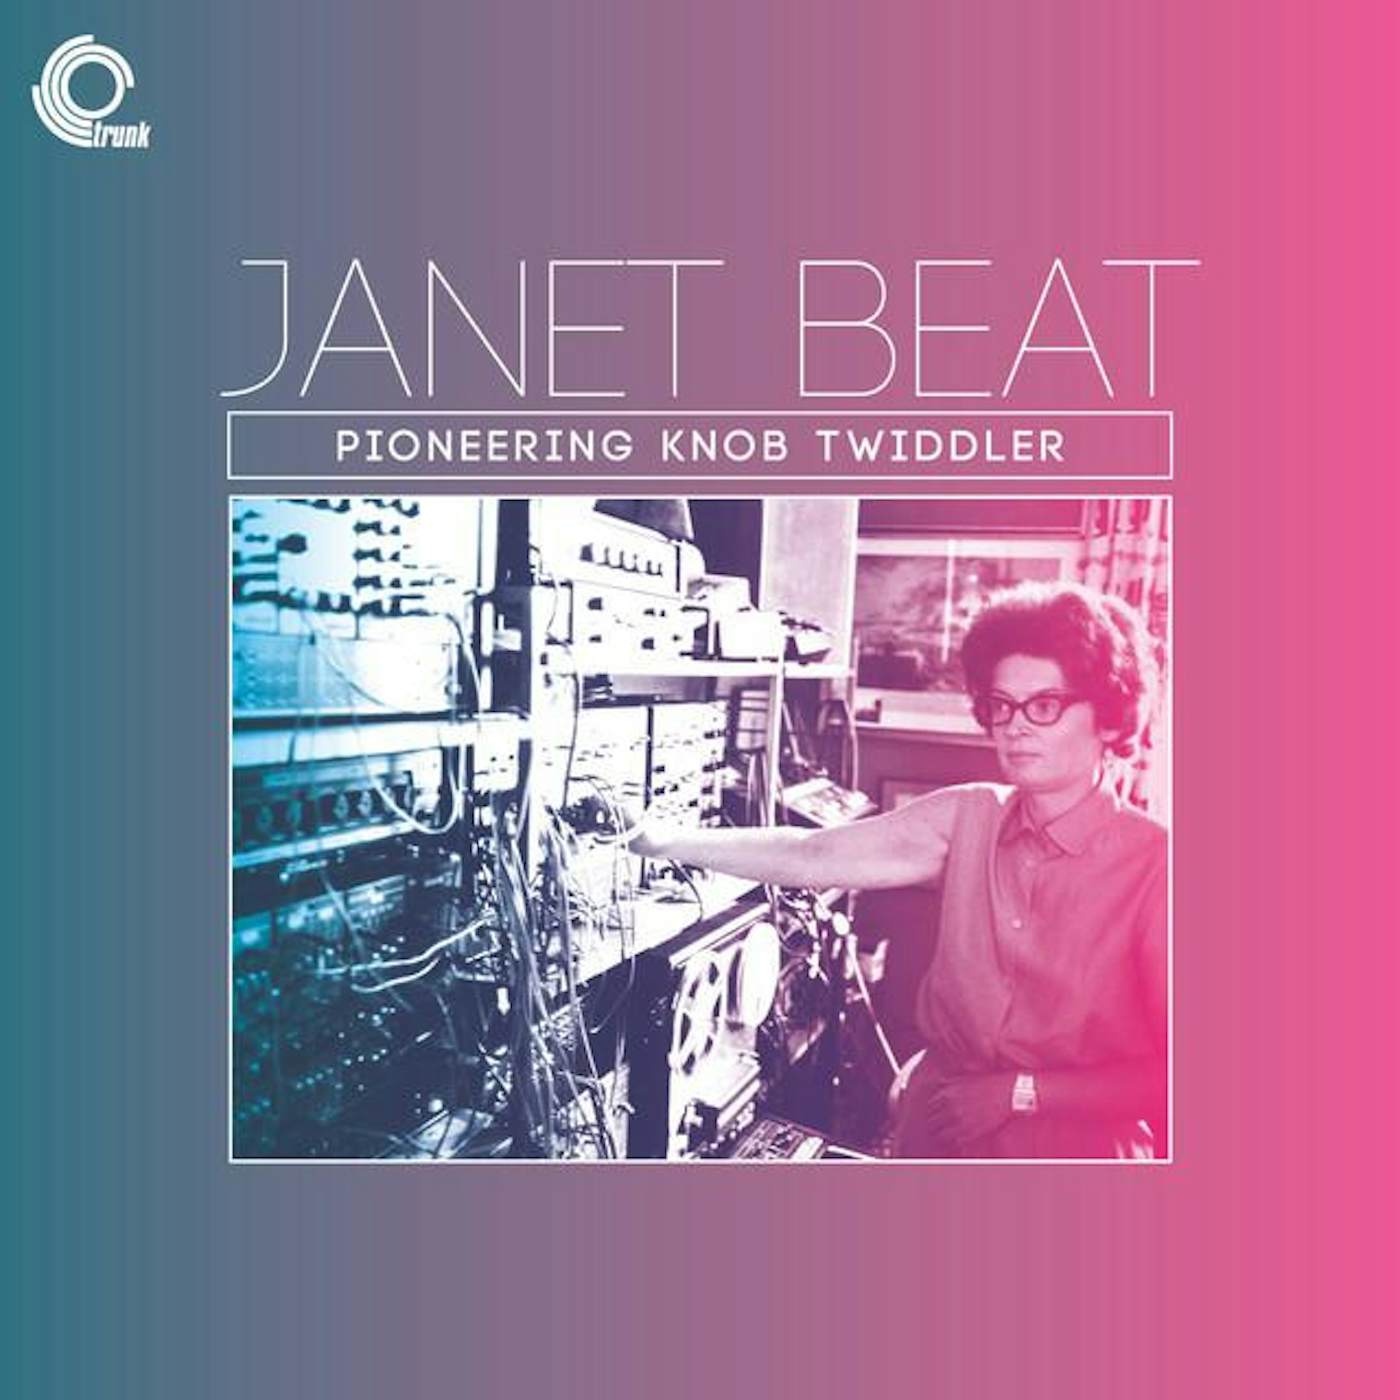 Janet Beat